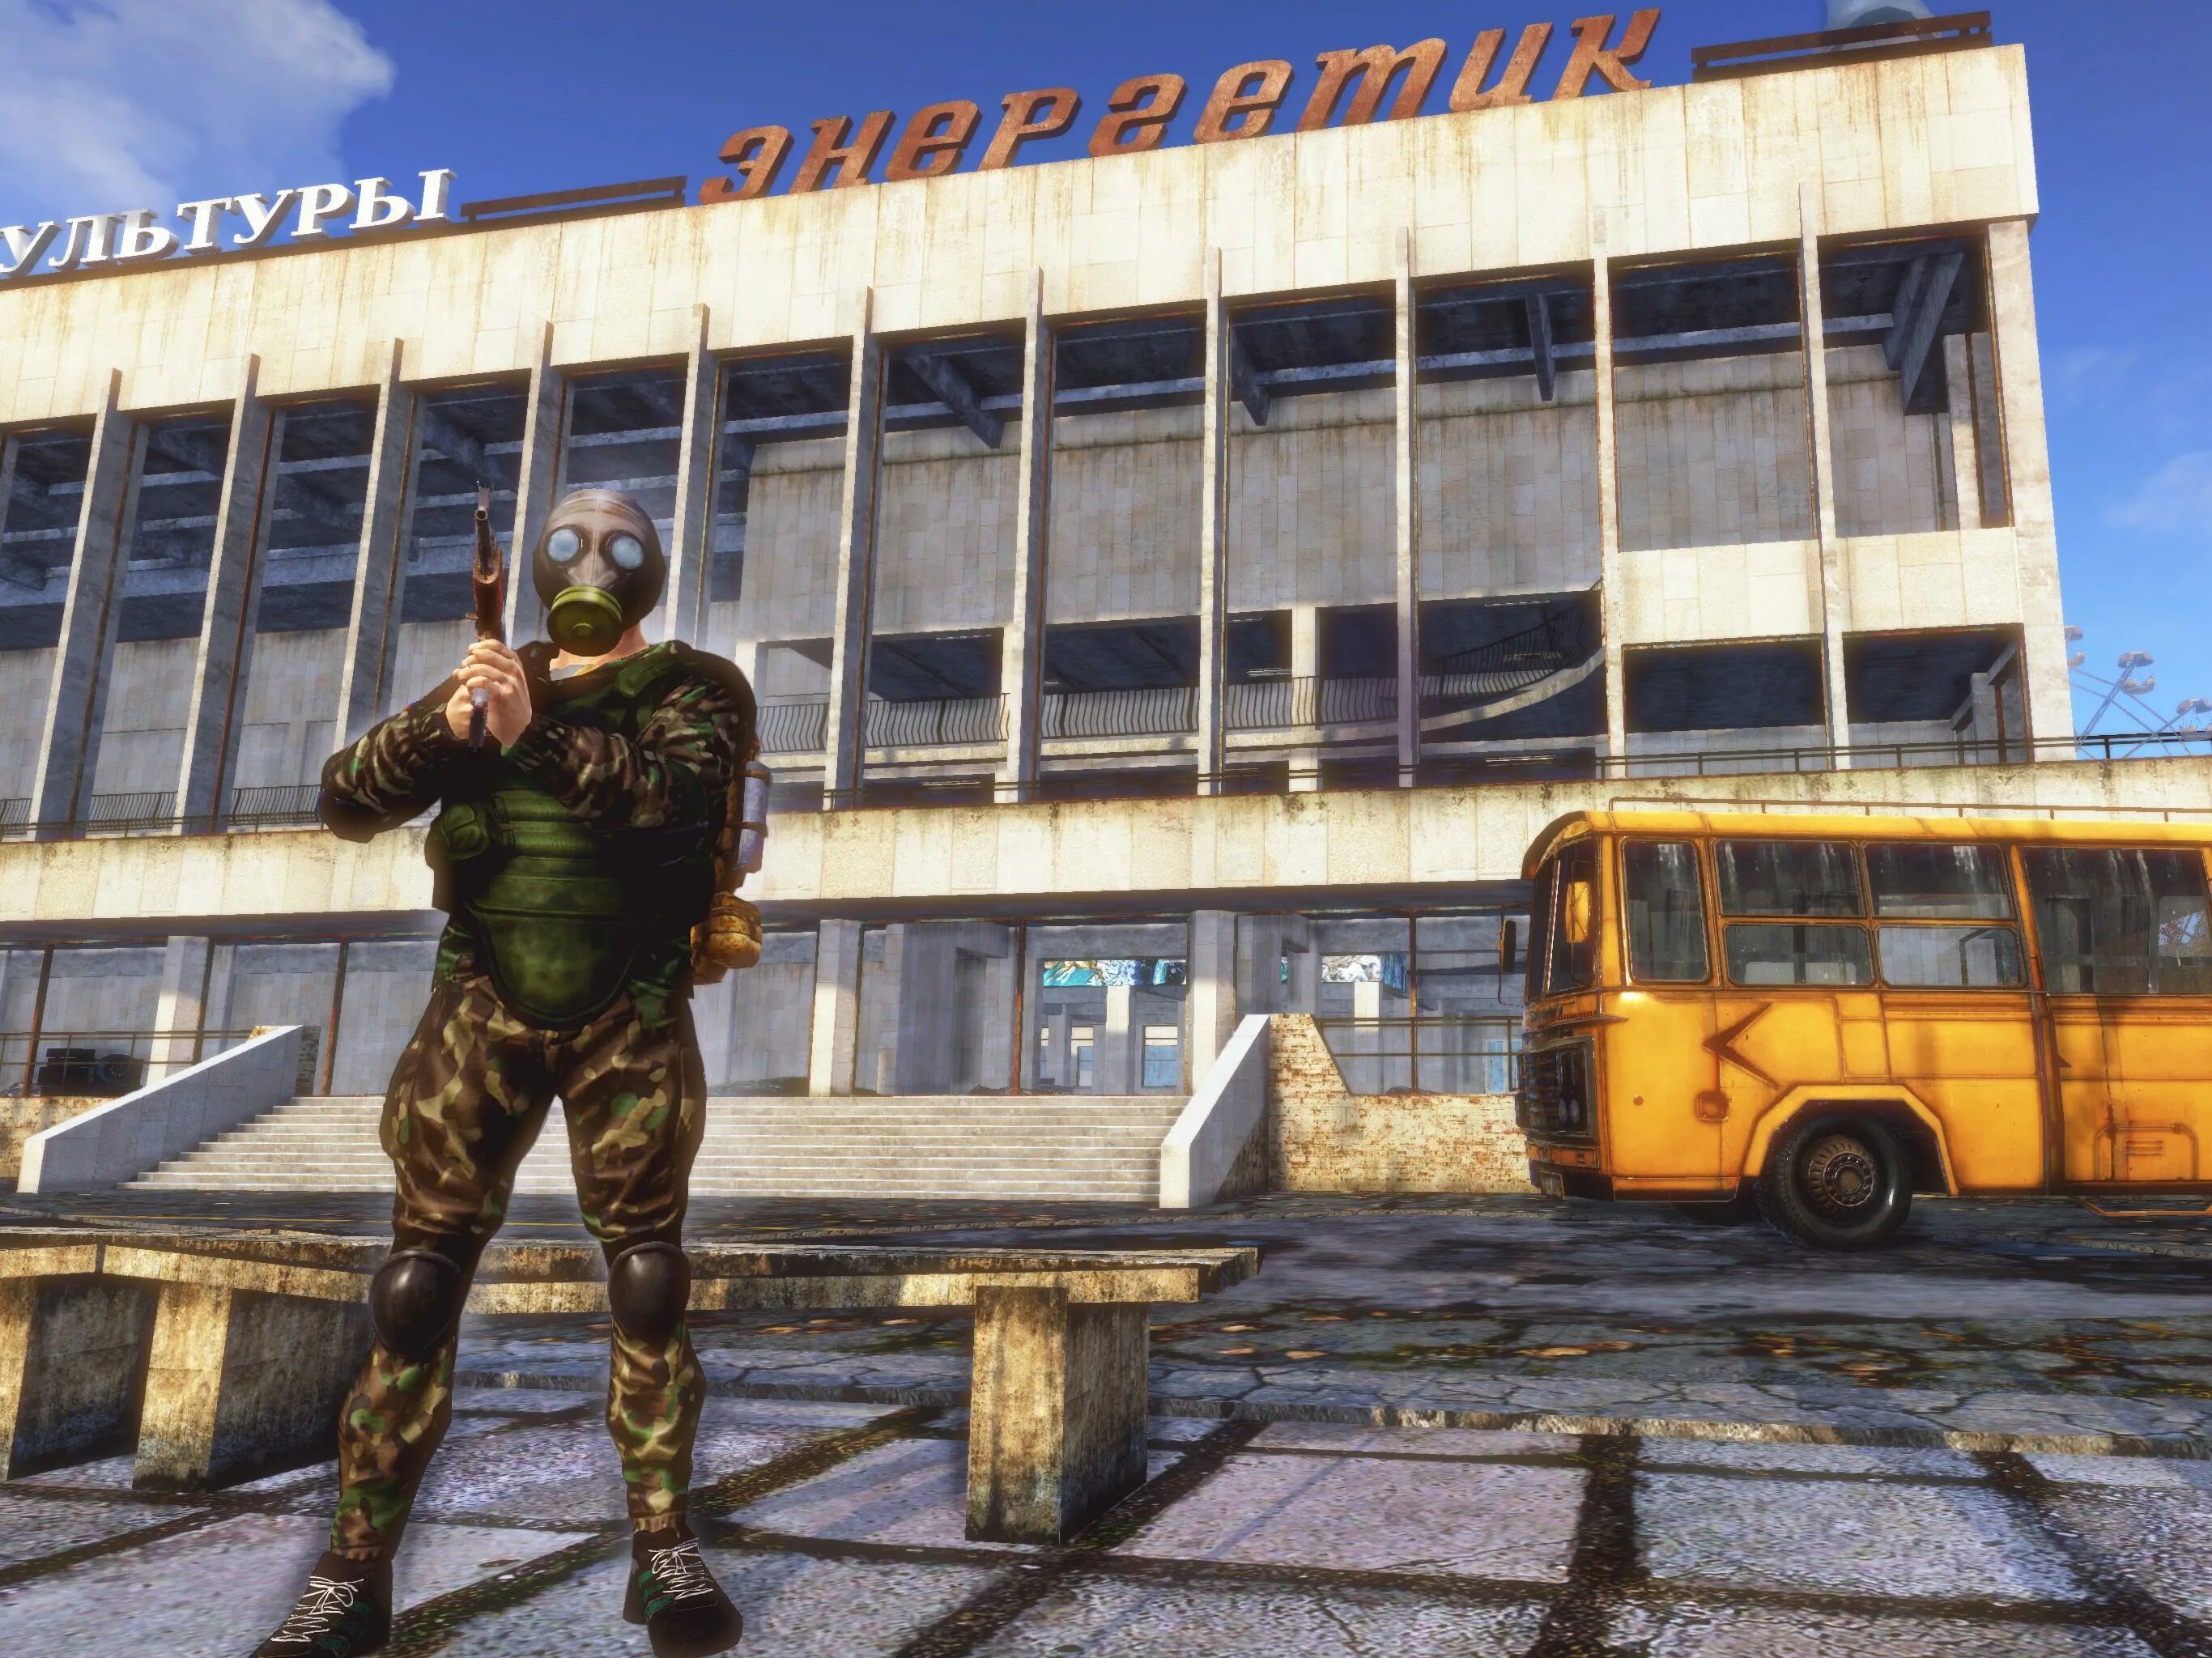 Chernobyl андроид. Припять в игре radiation City. Припять 2077. Припять игра.